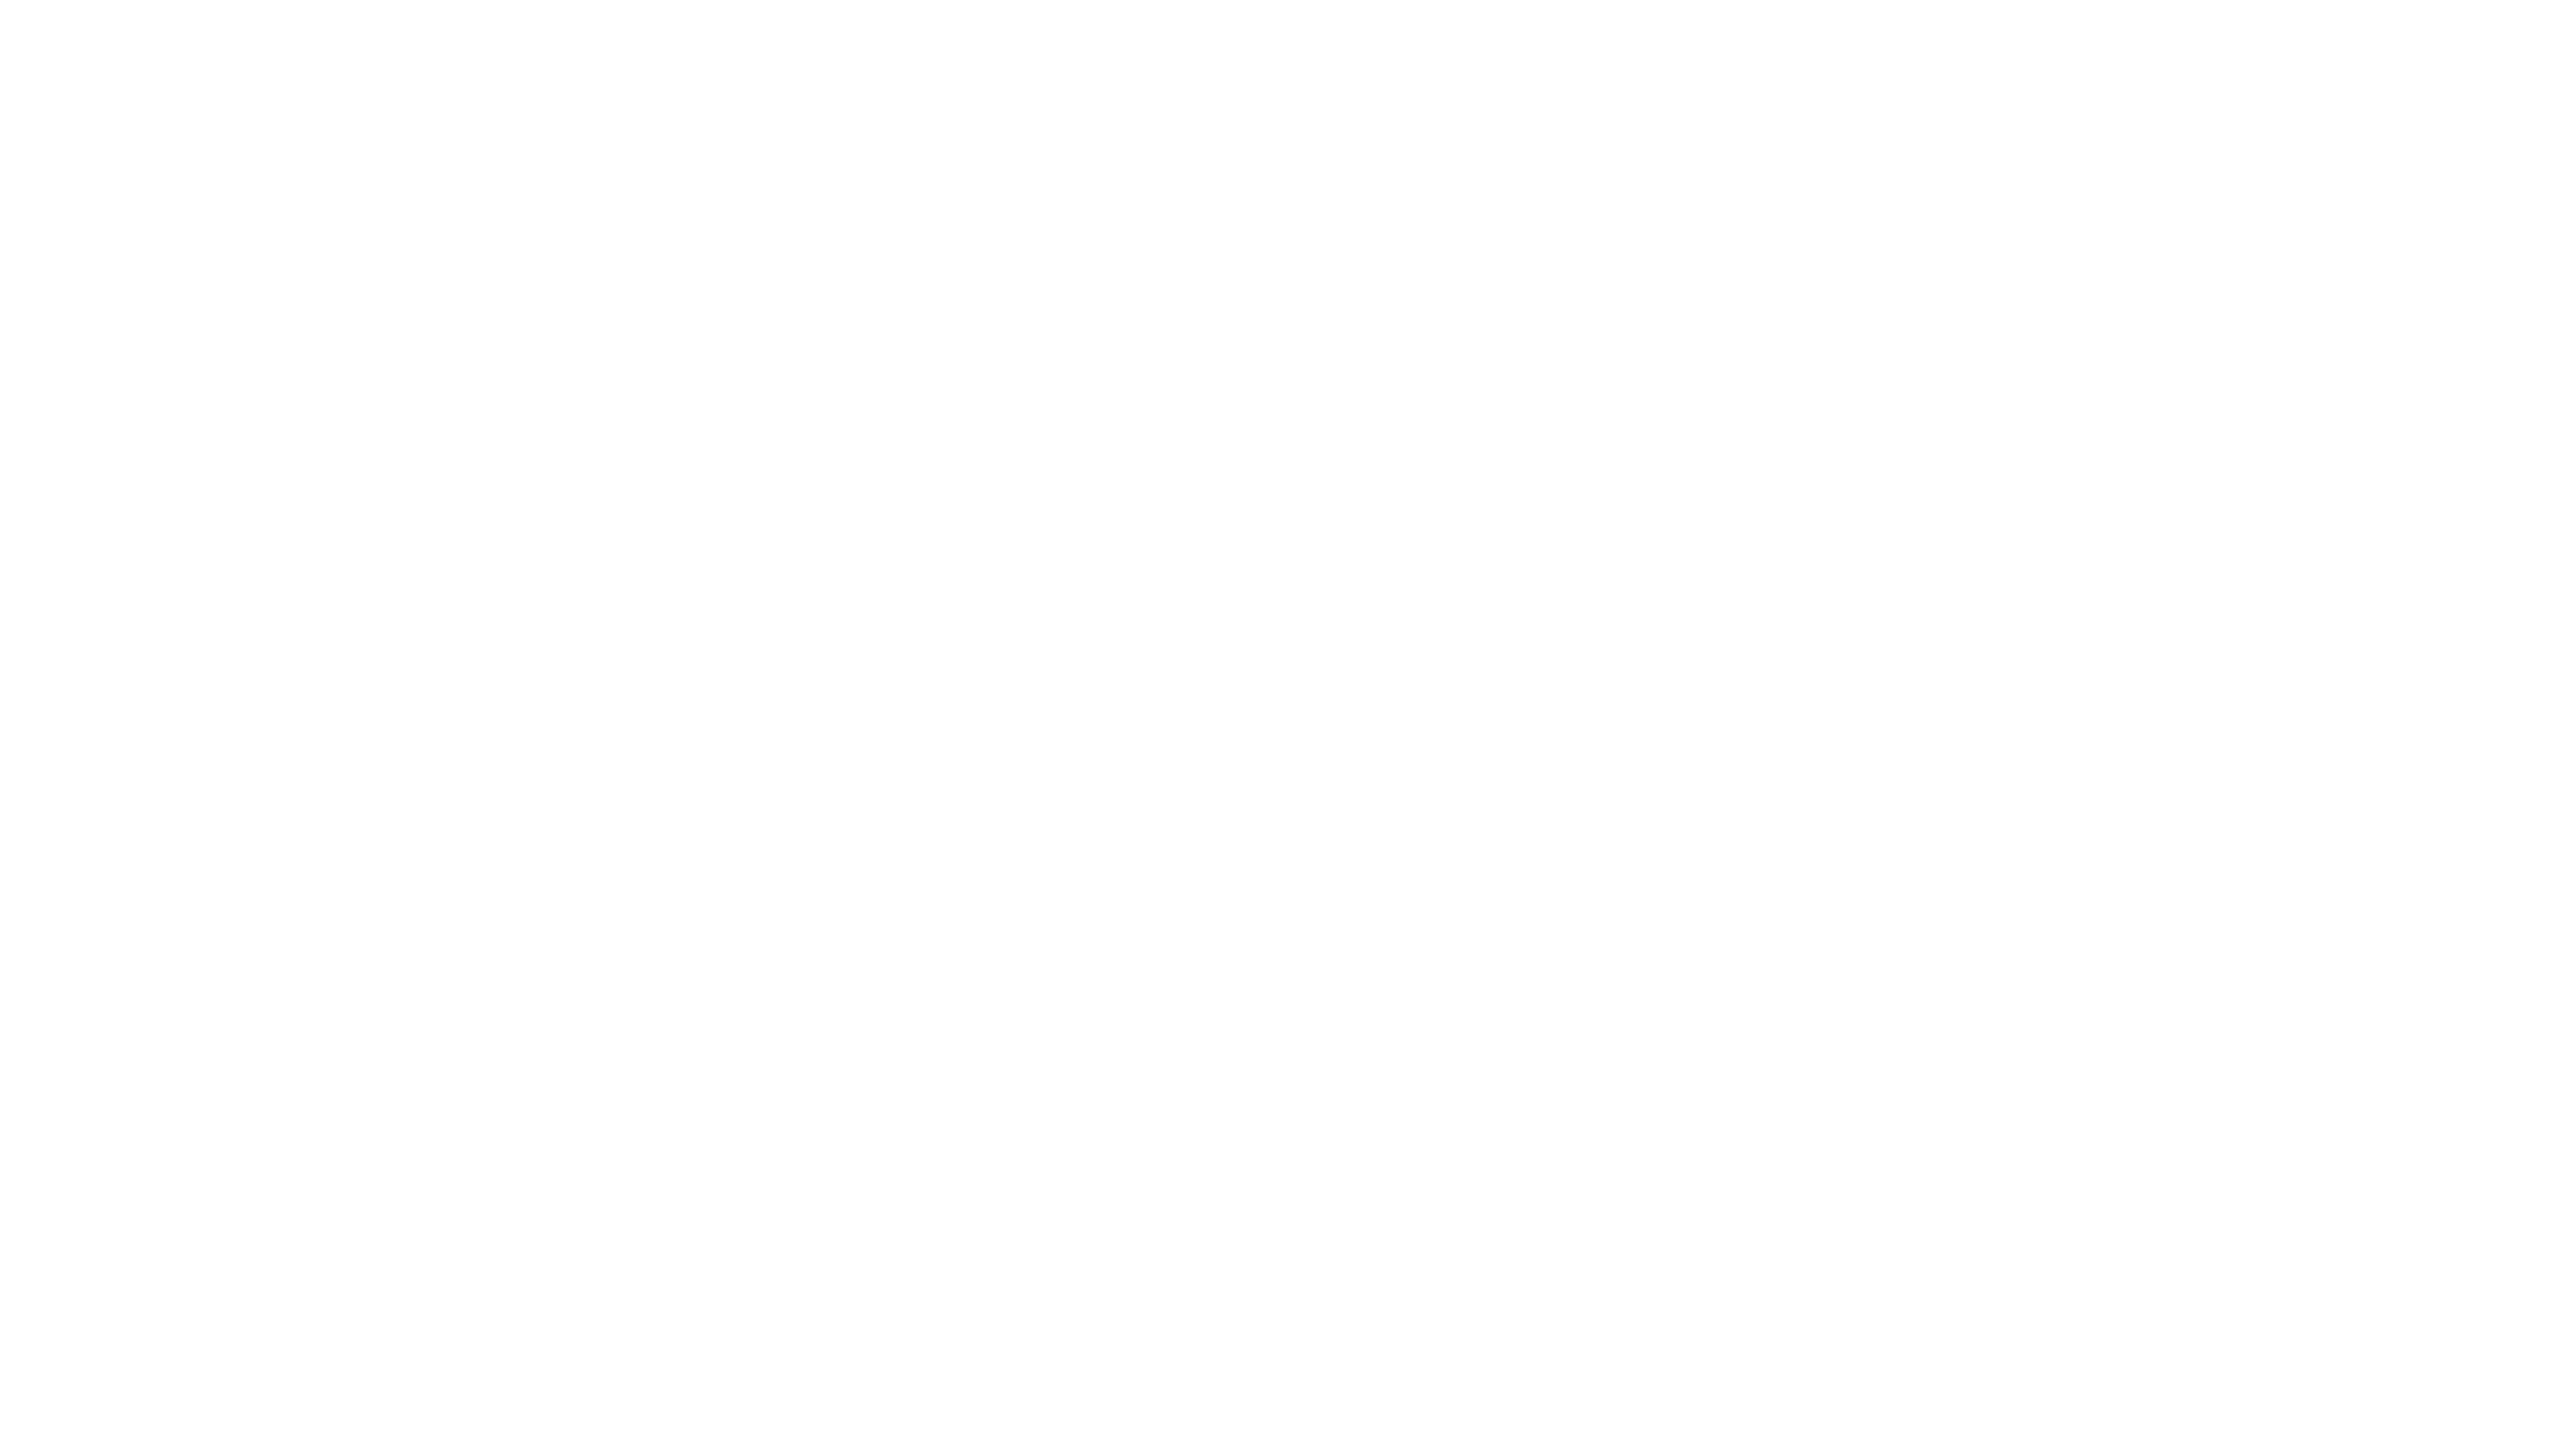 edri_logo_white